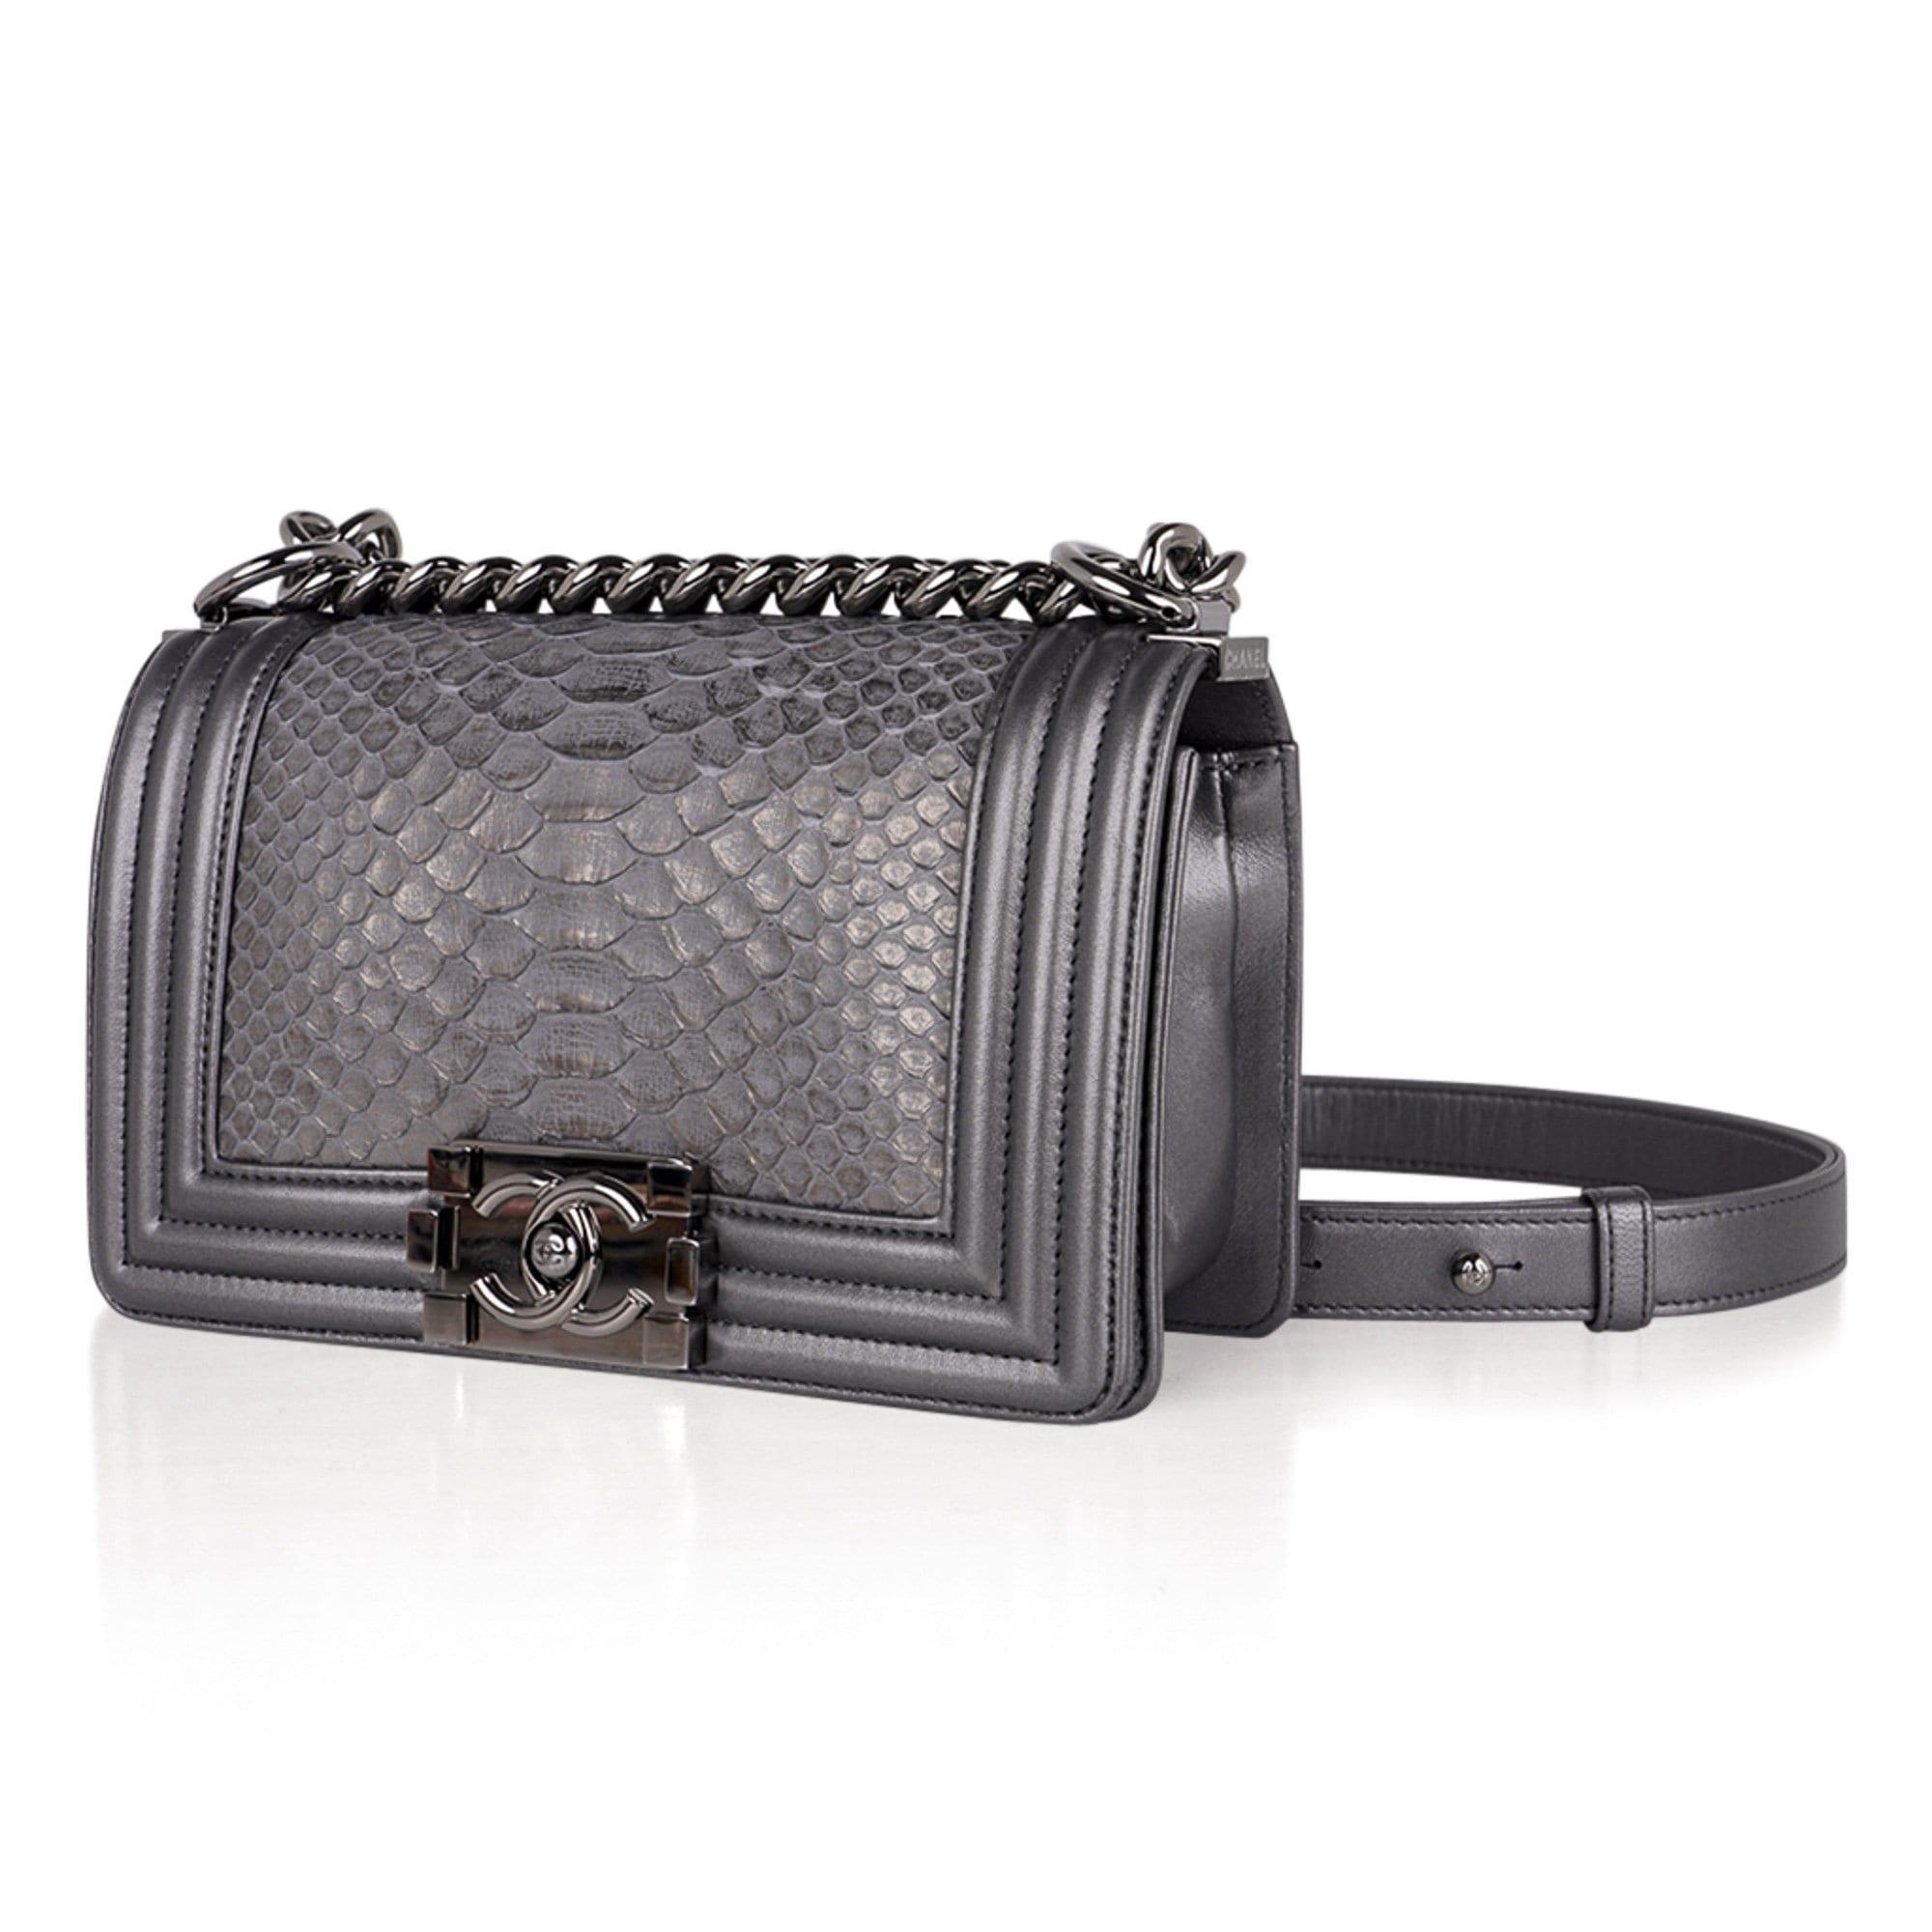 Chanel Boy Bag Silver Python / Leather Ruthenium Hardware Medium New w/Box